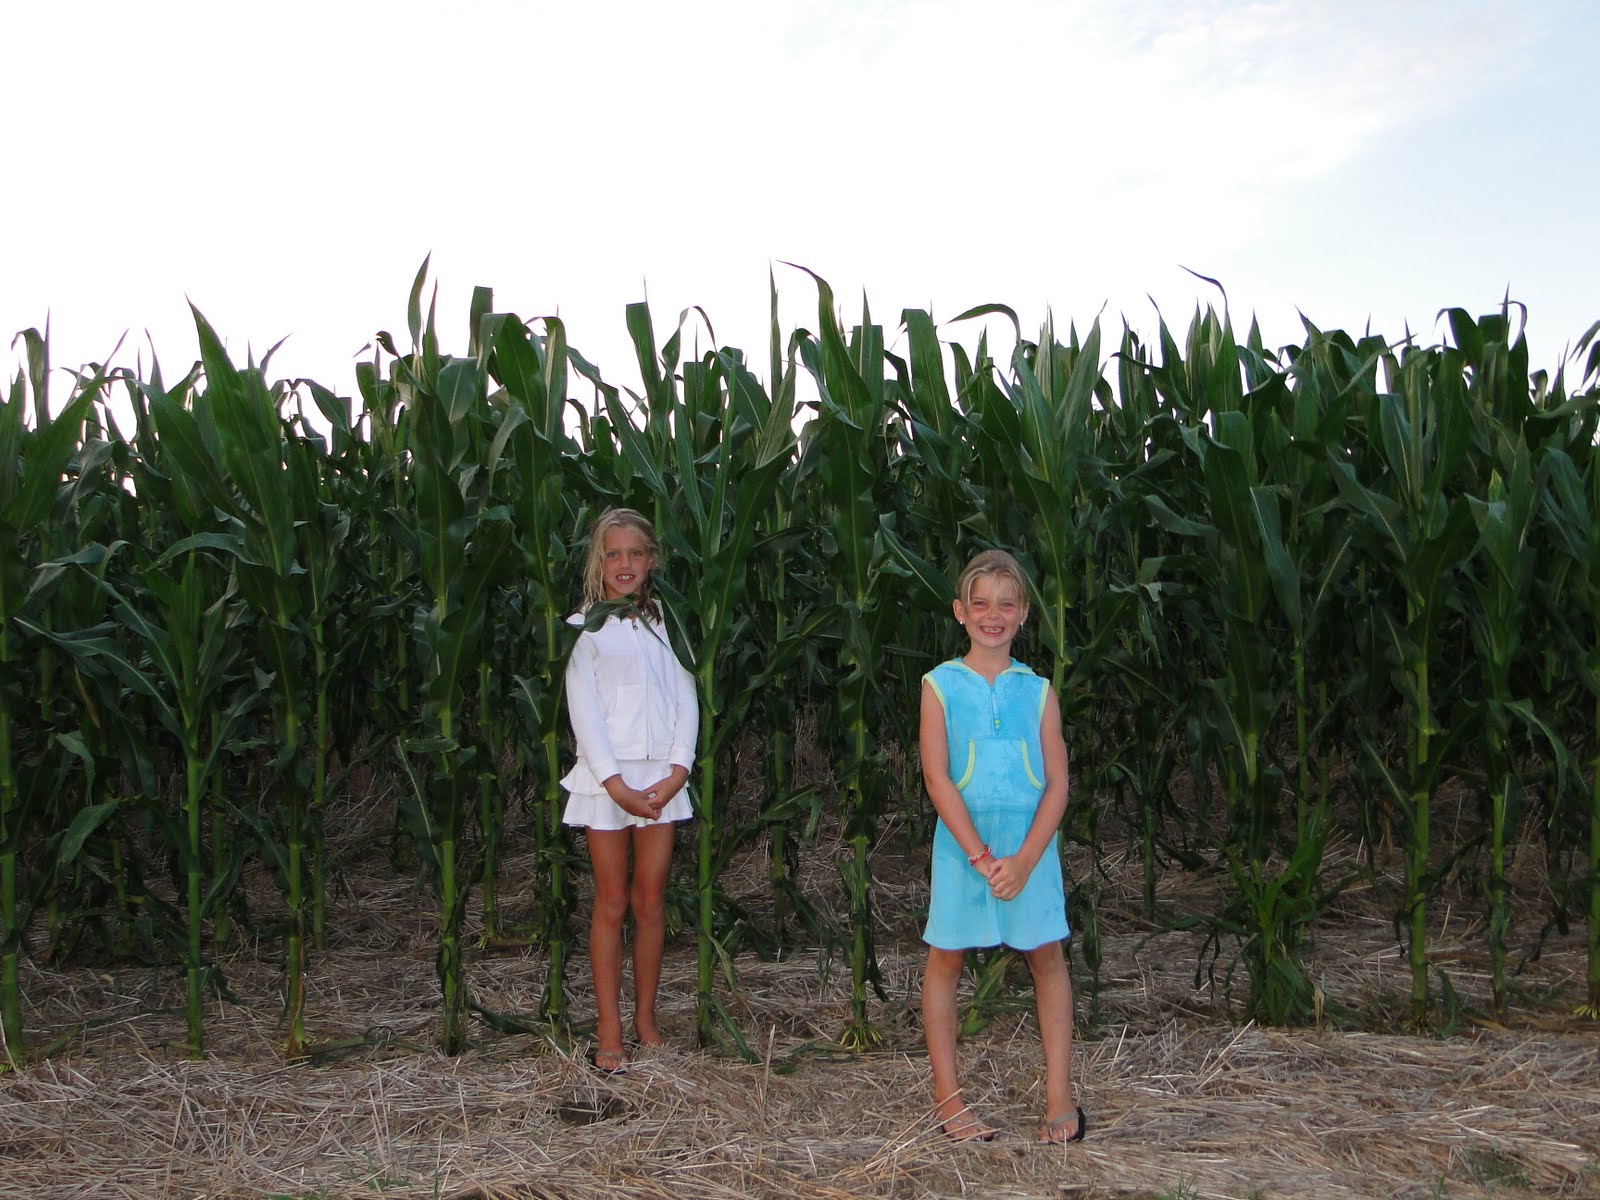 rain makes corn